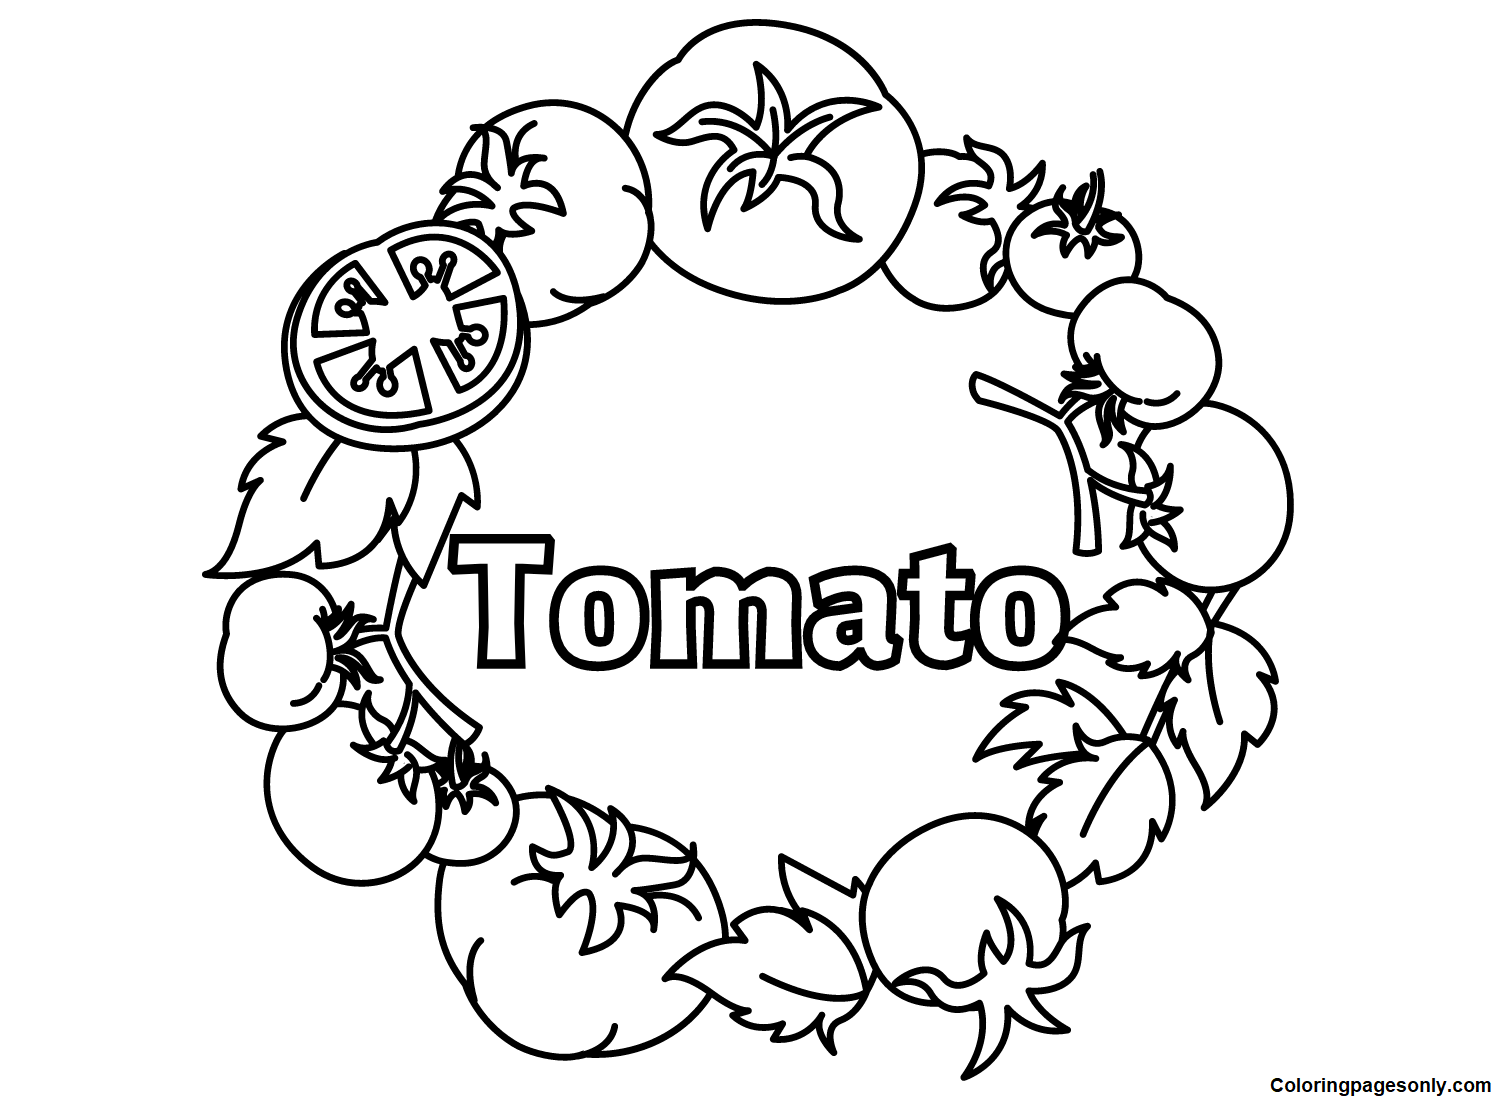 Tomatenafbeeldingen van Tomato